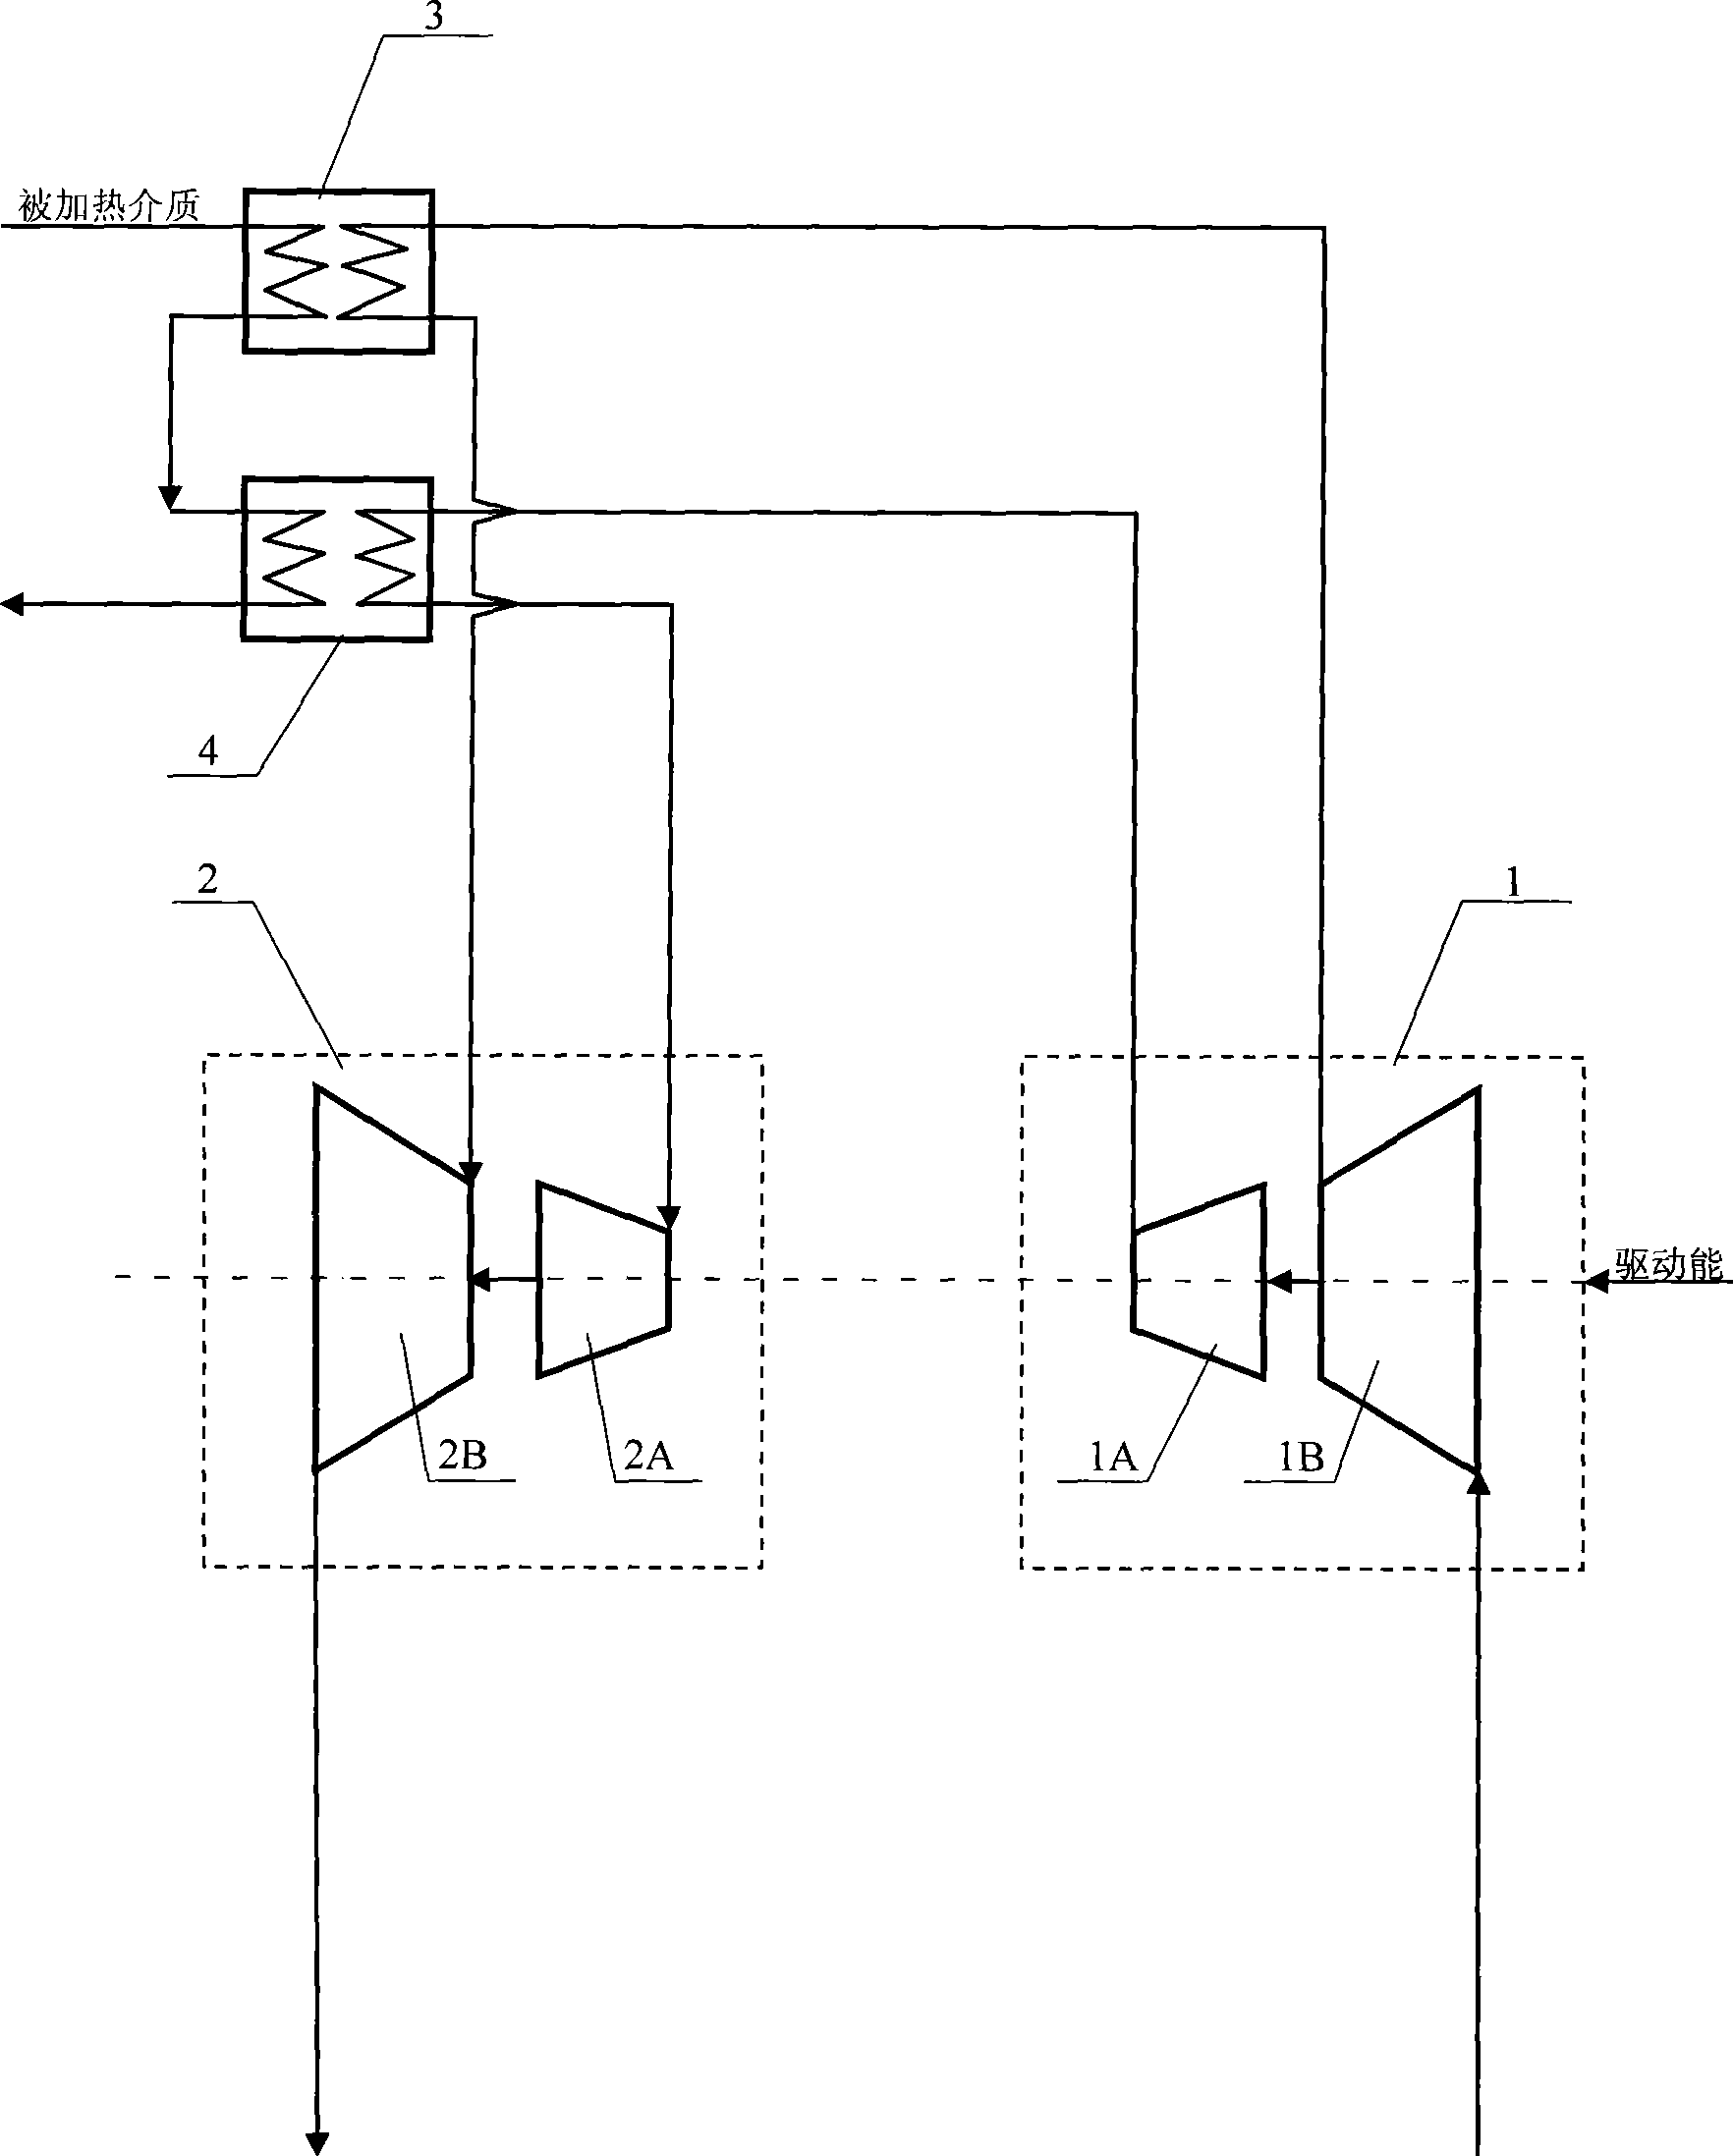 Segmented compression-segmented heat supply-segmented expansion gas compression type units